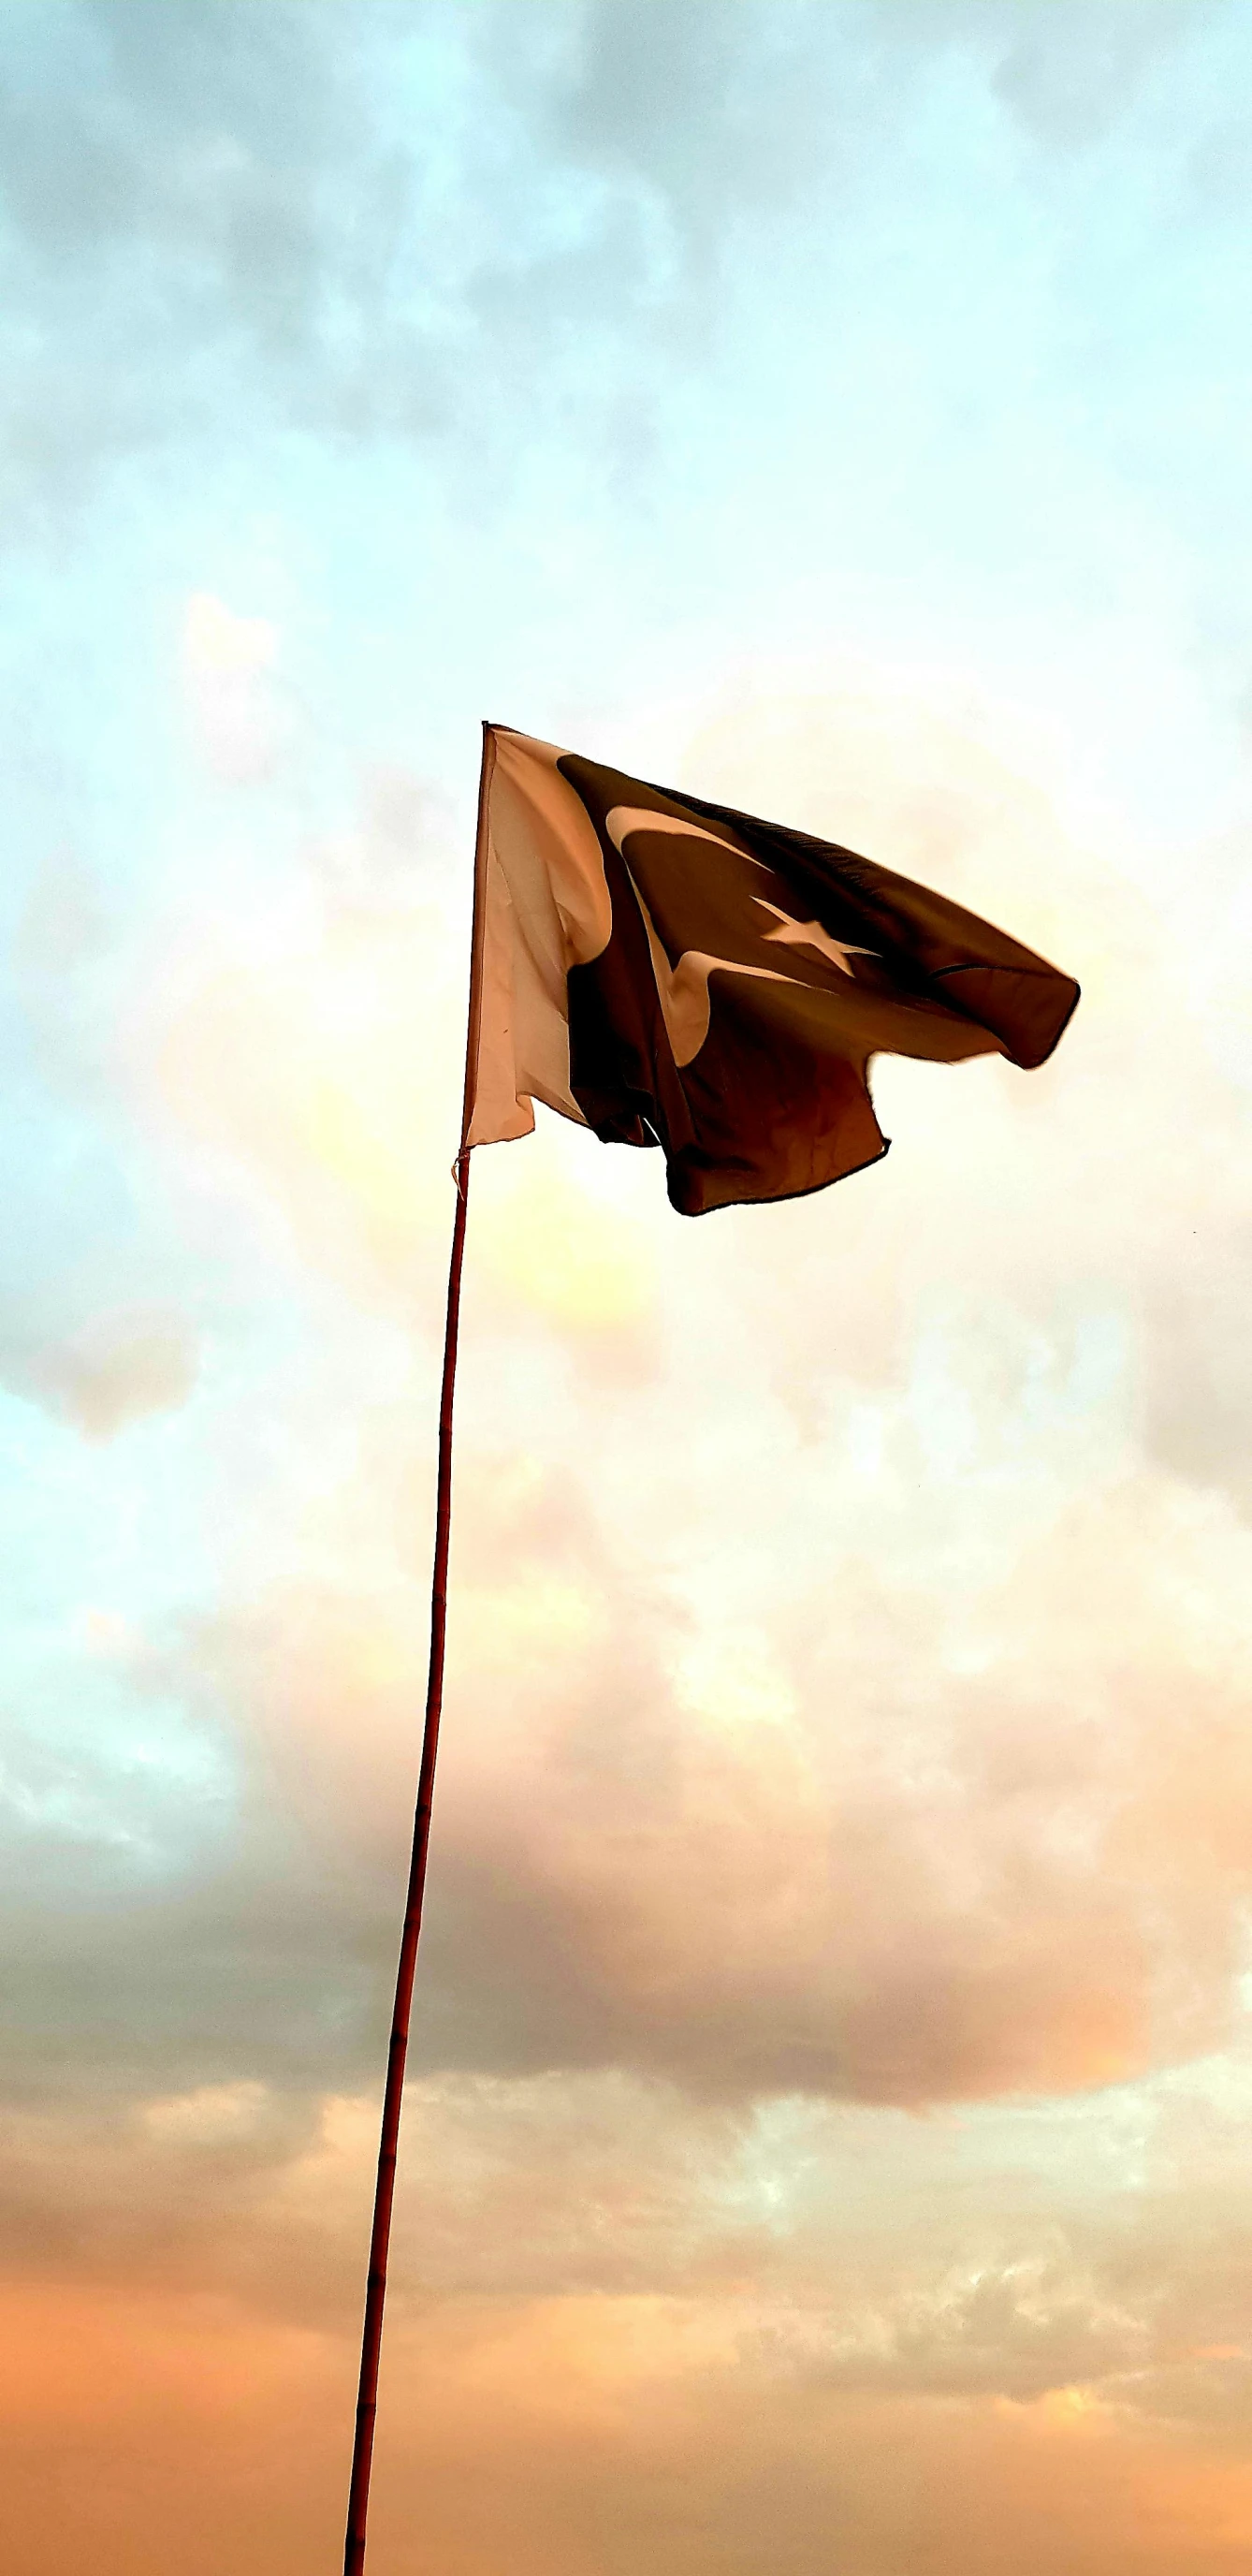 a man flying a kite on top of a beach, an album cover, by Riza Abbasi, pexels, hurufiyya, flag, stern, historical, pork